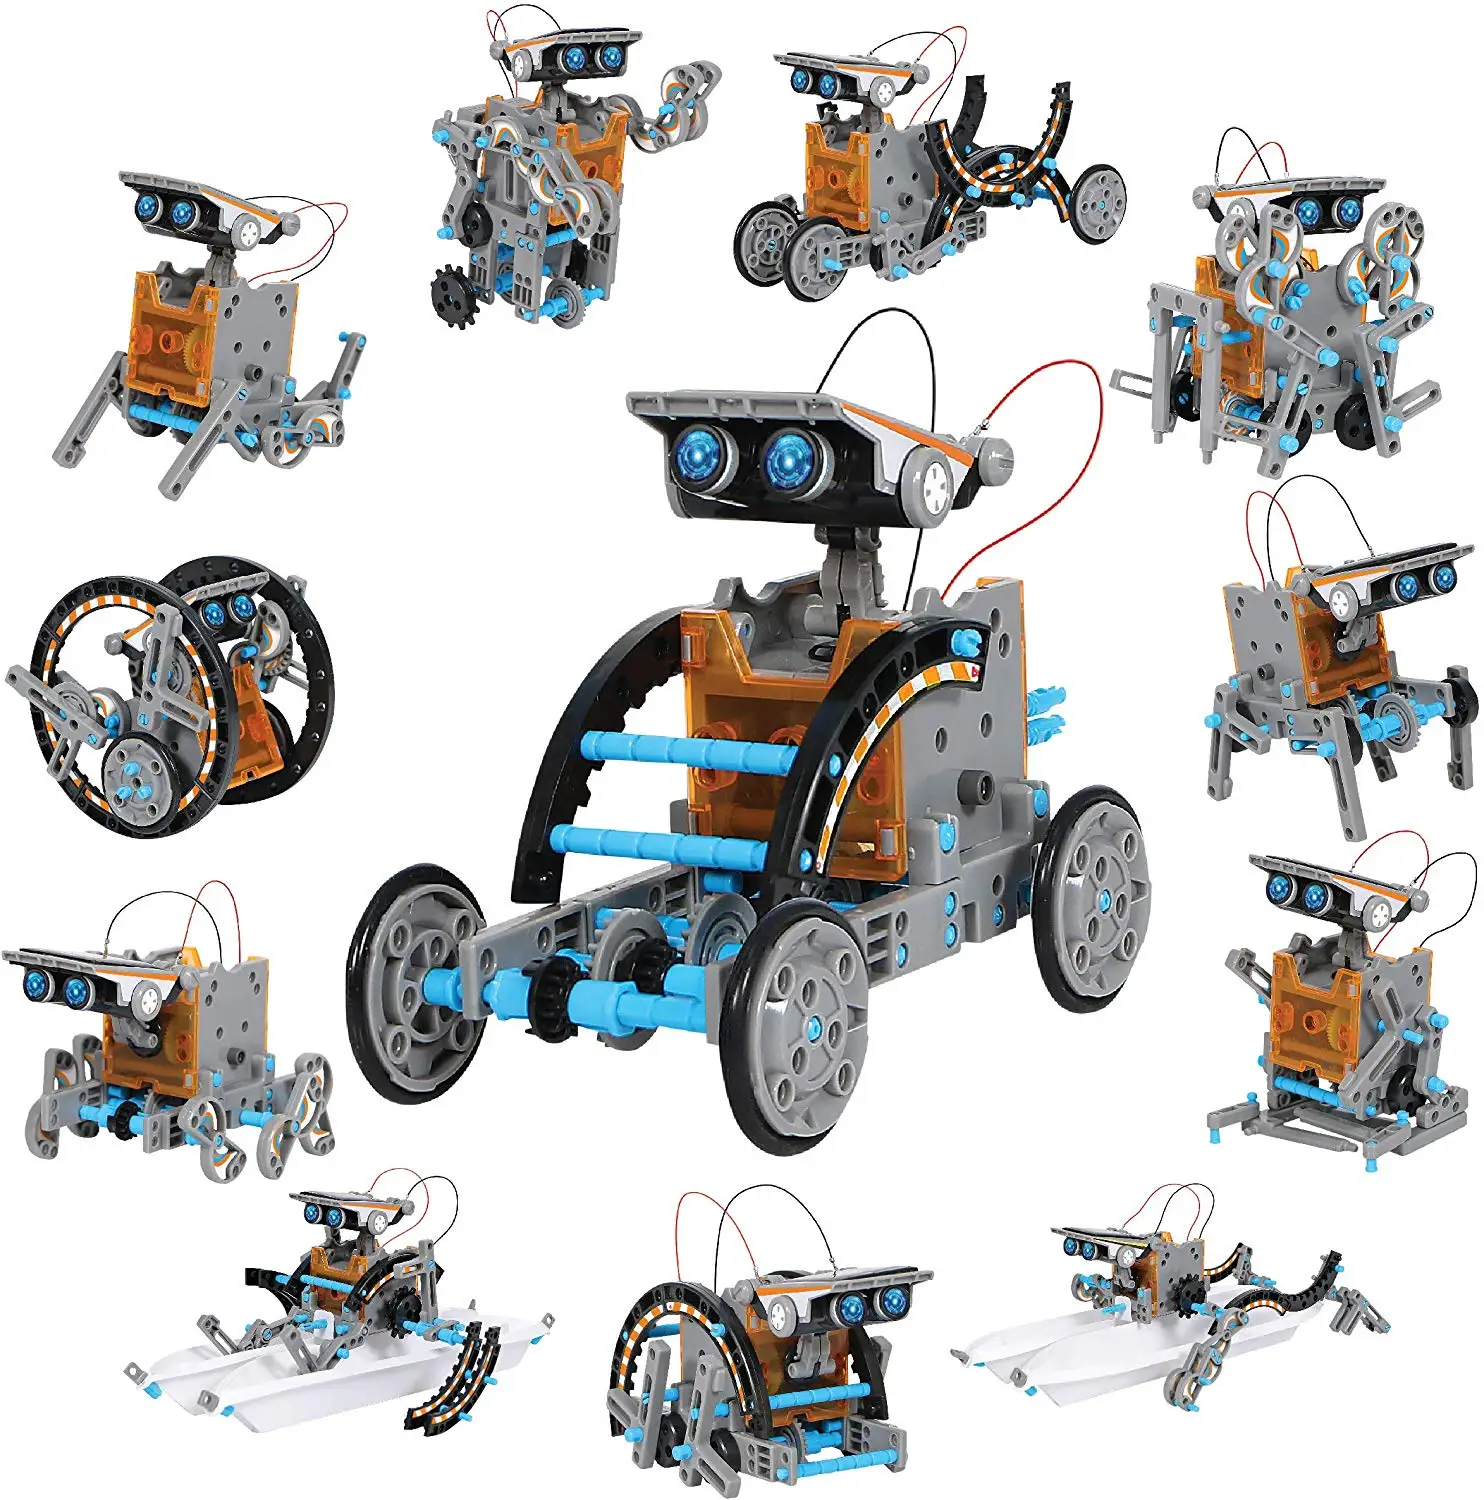 Blue Solar Toy Educational Models Kits DIY Car Hobby Robot Buliding Learning 